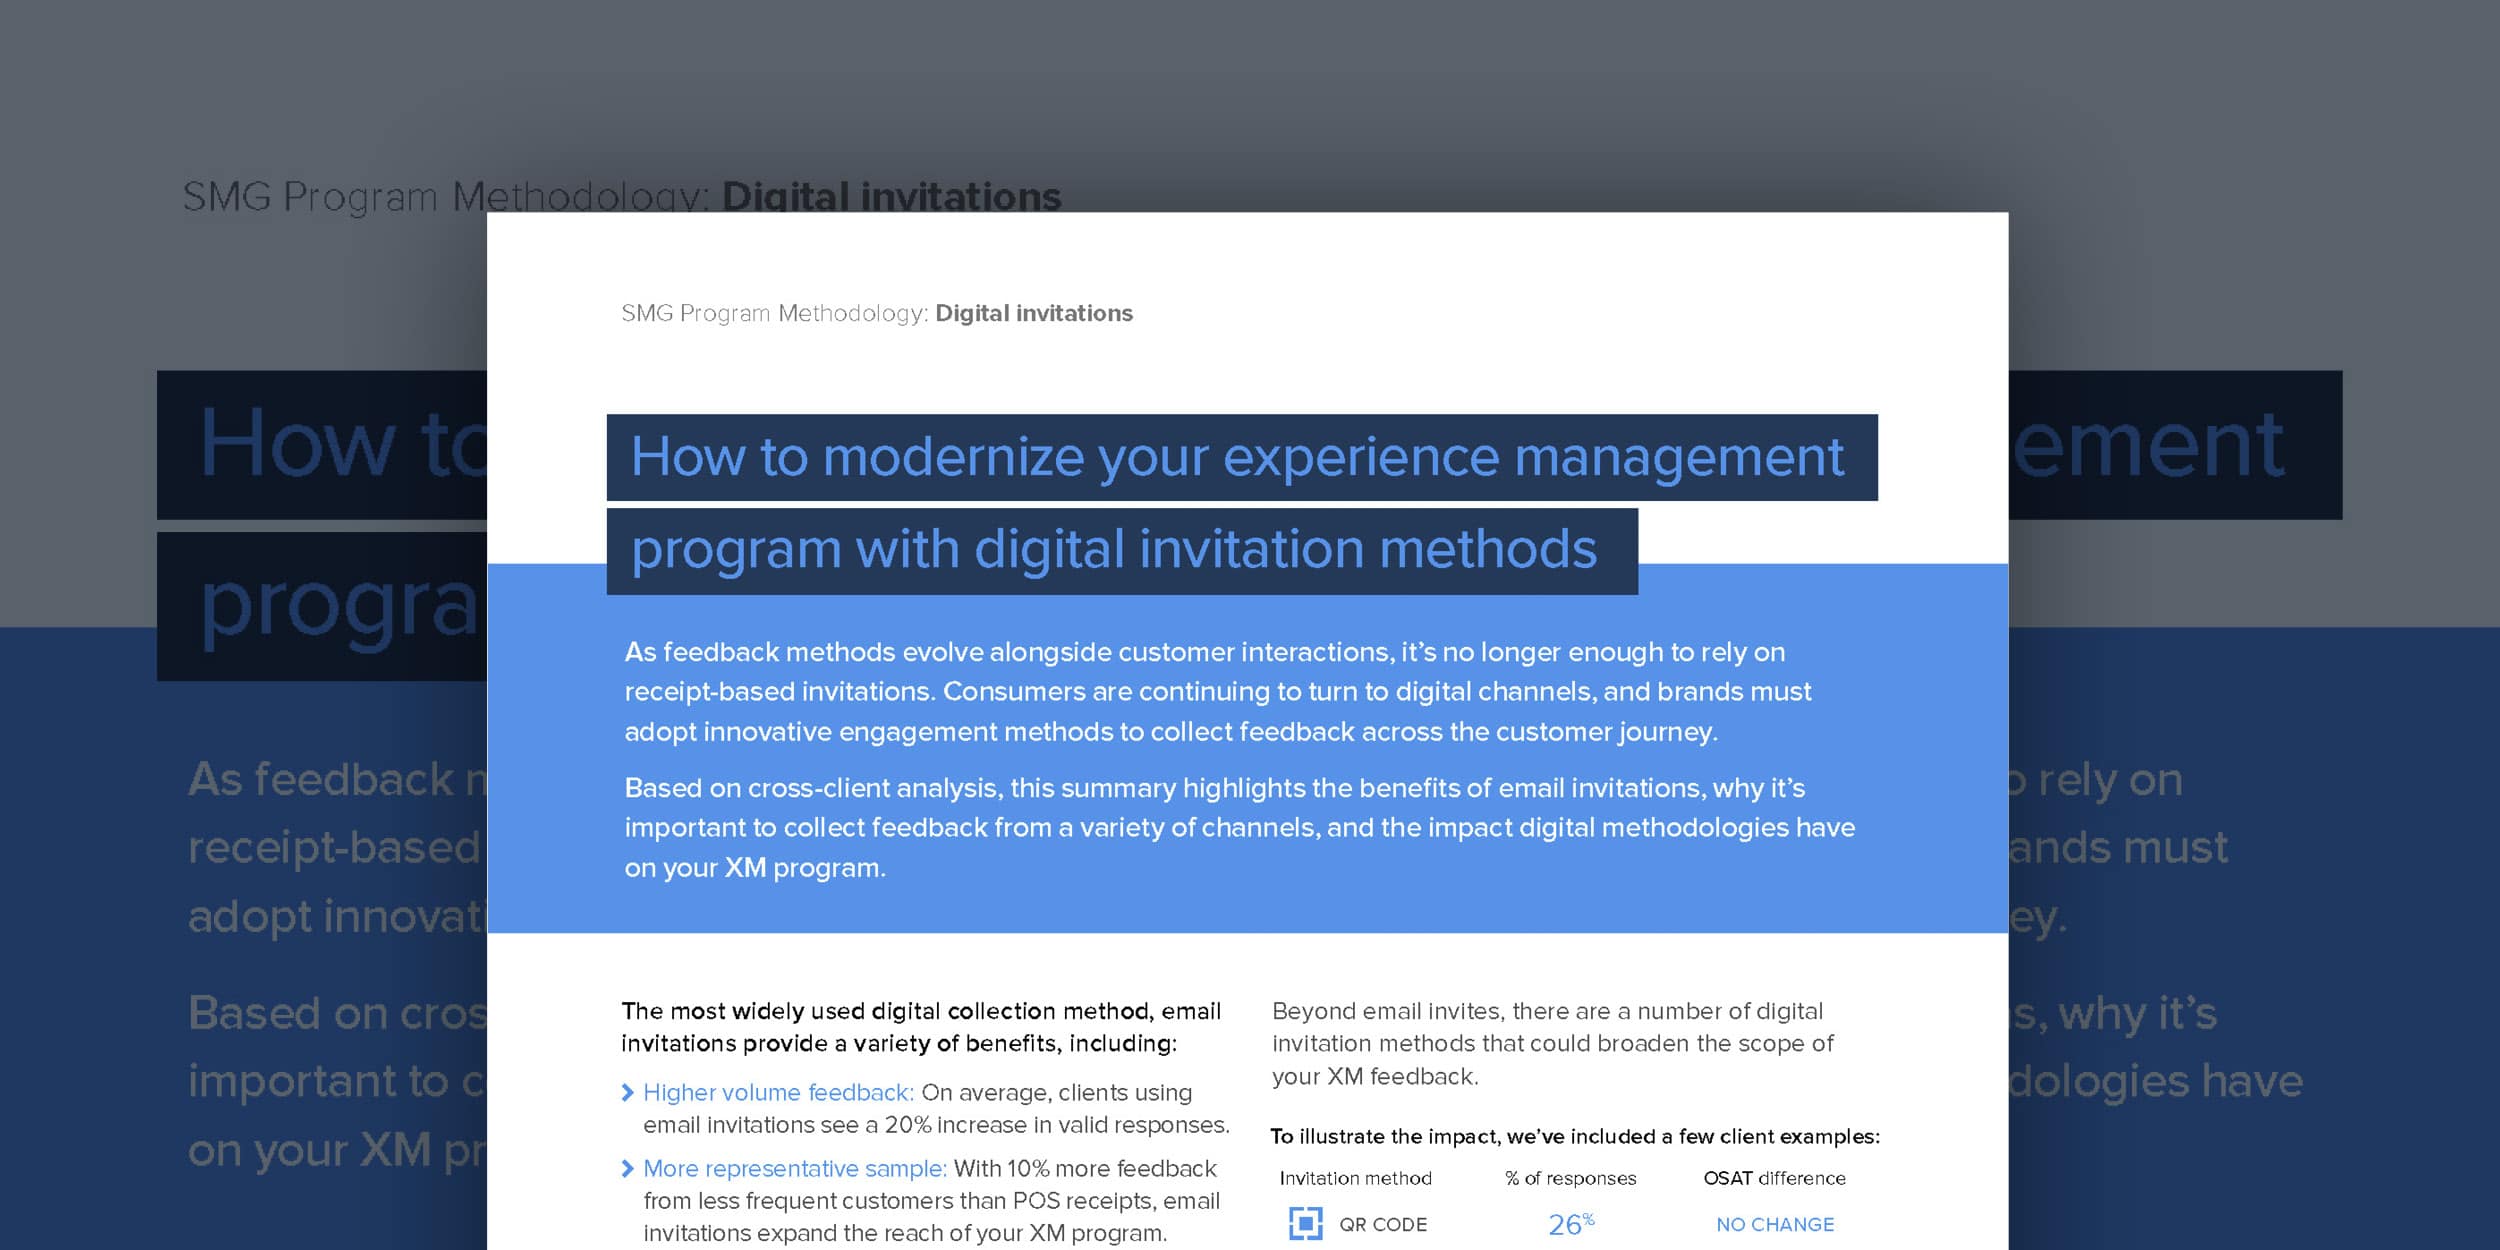 SMG Program Methodology: Digital invitations